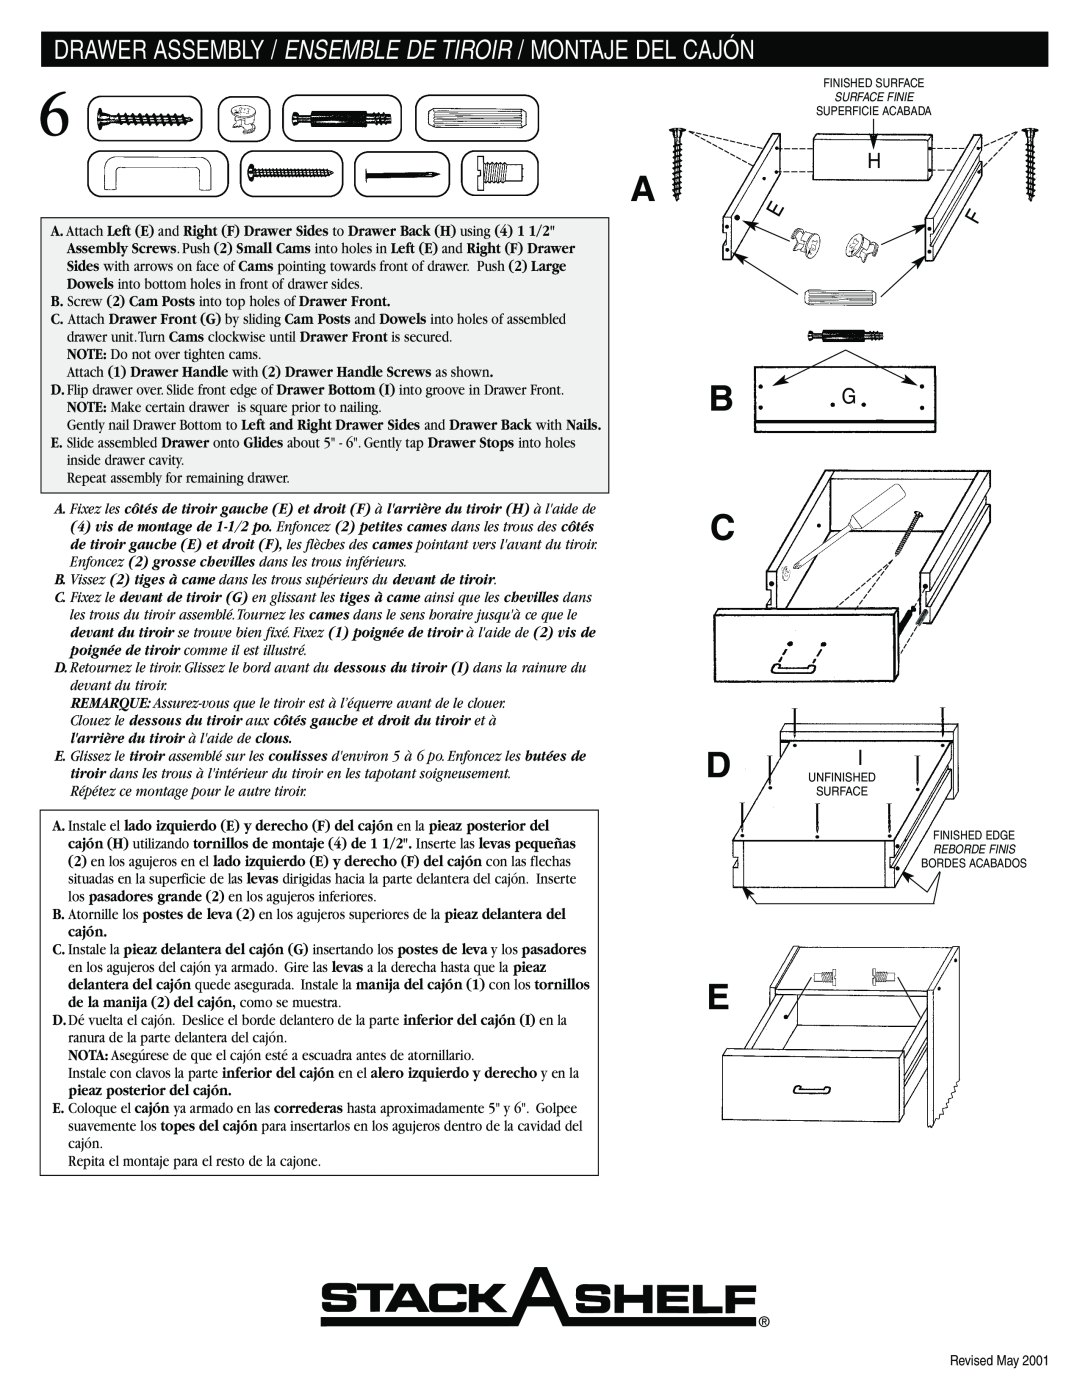 Closet Maid SSO2DW instruction sheet B G C, Drawer Assembly / Ensemble De Tiroir / Montaje Del Cajón 